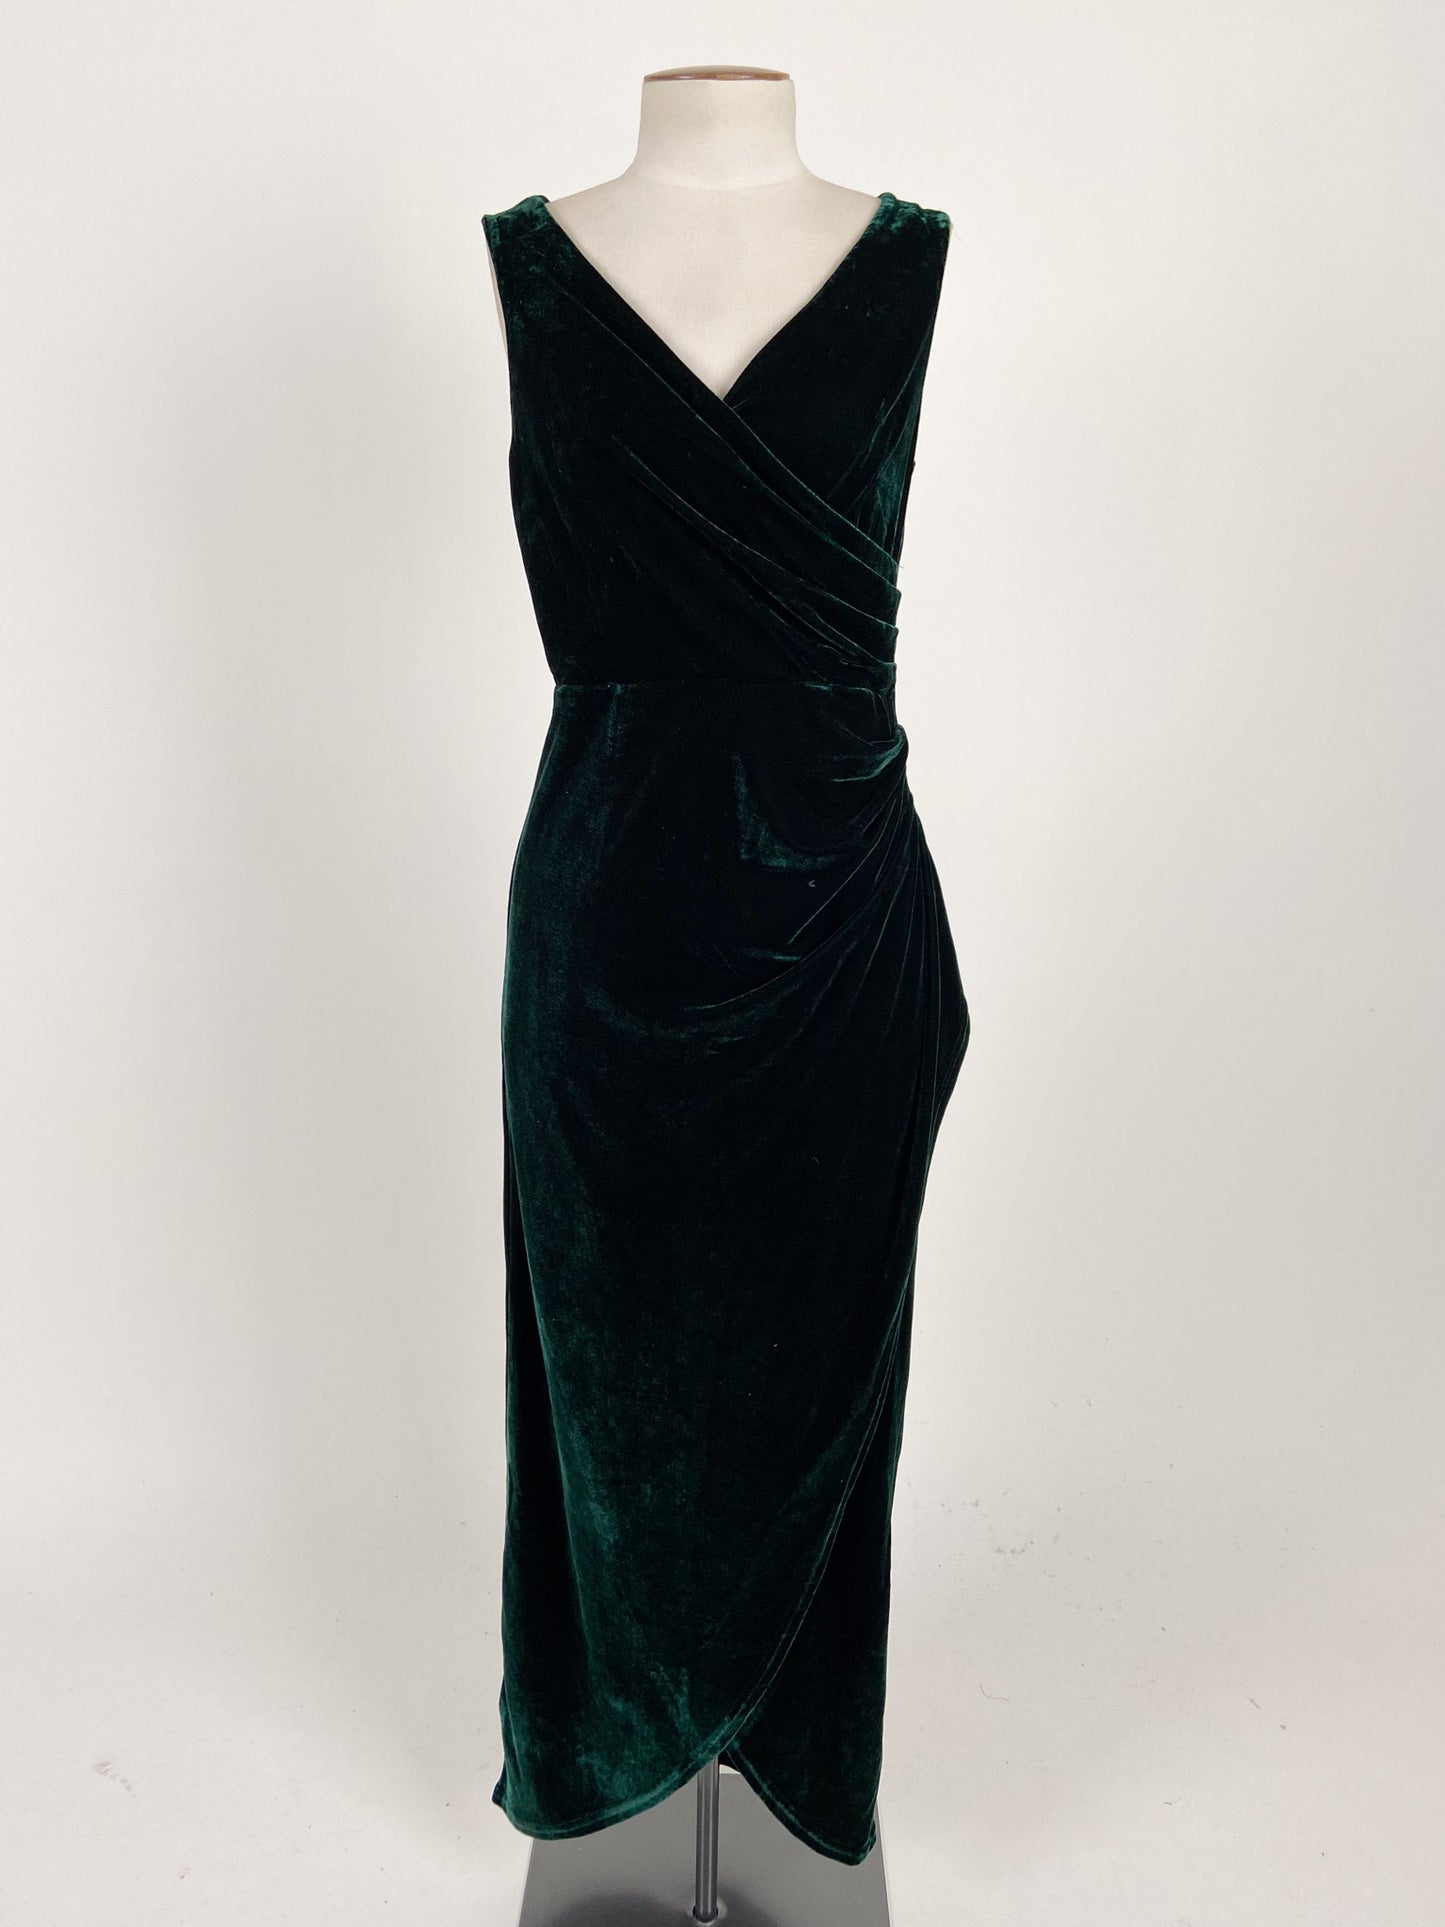 Pagani | Green Formal Dress | Size 6